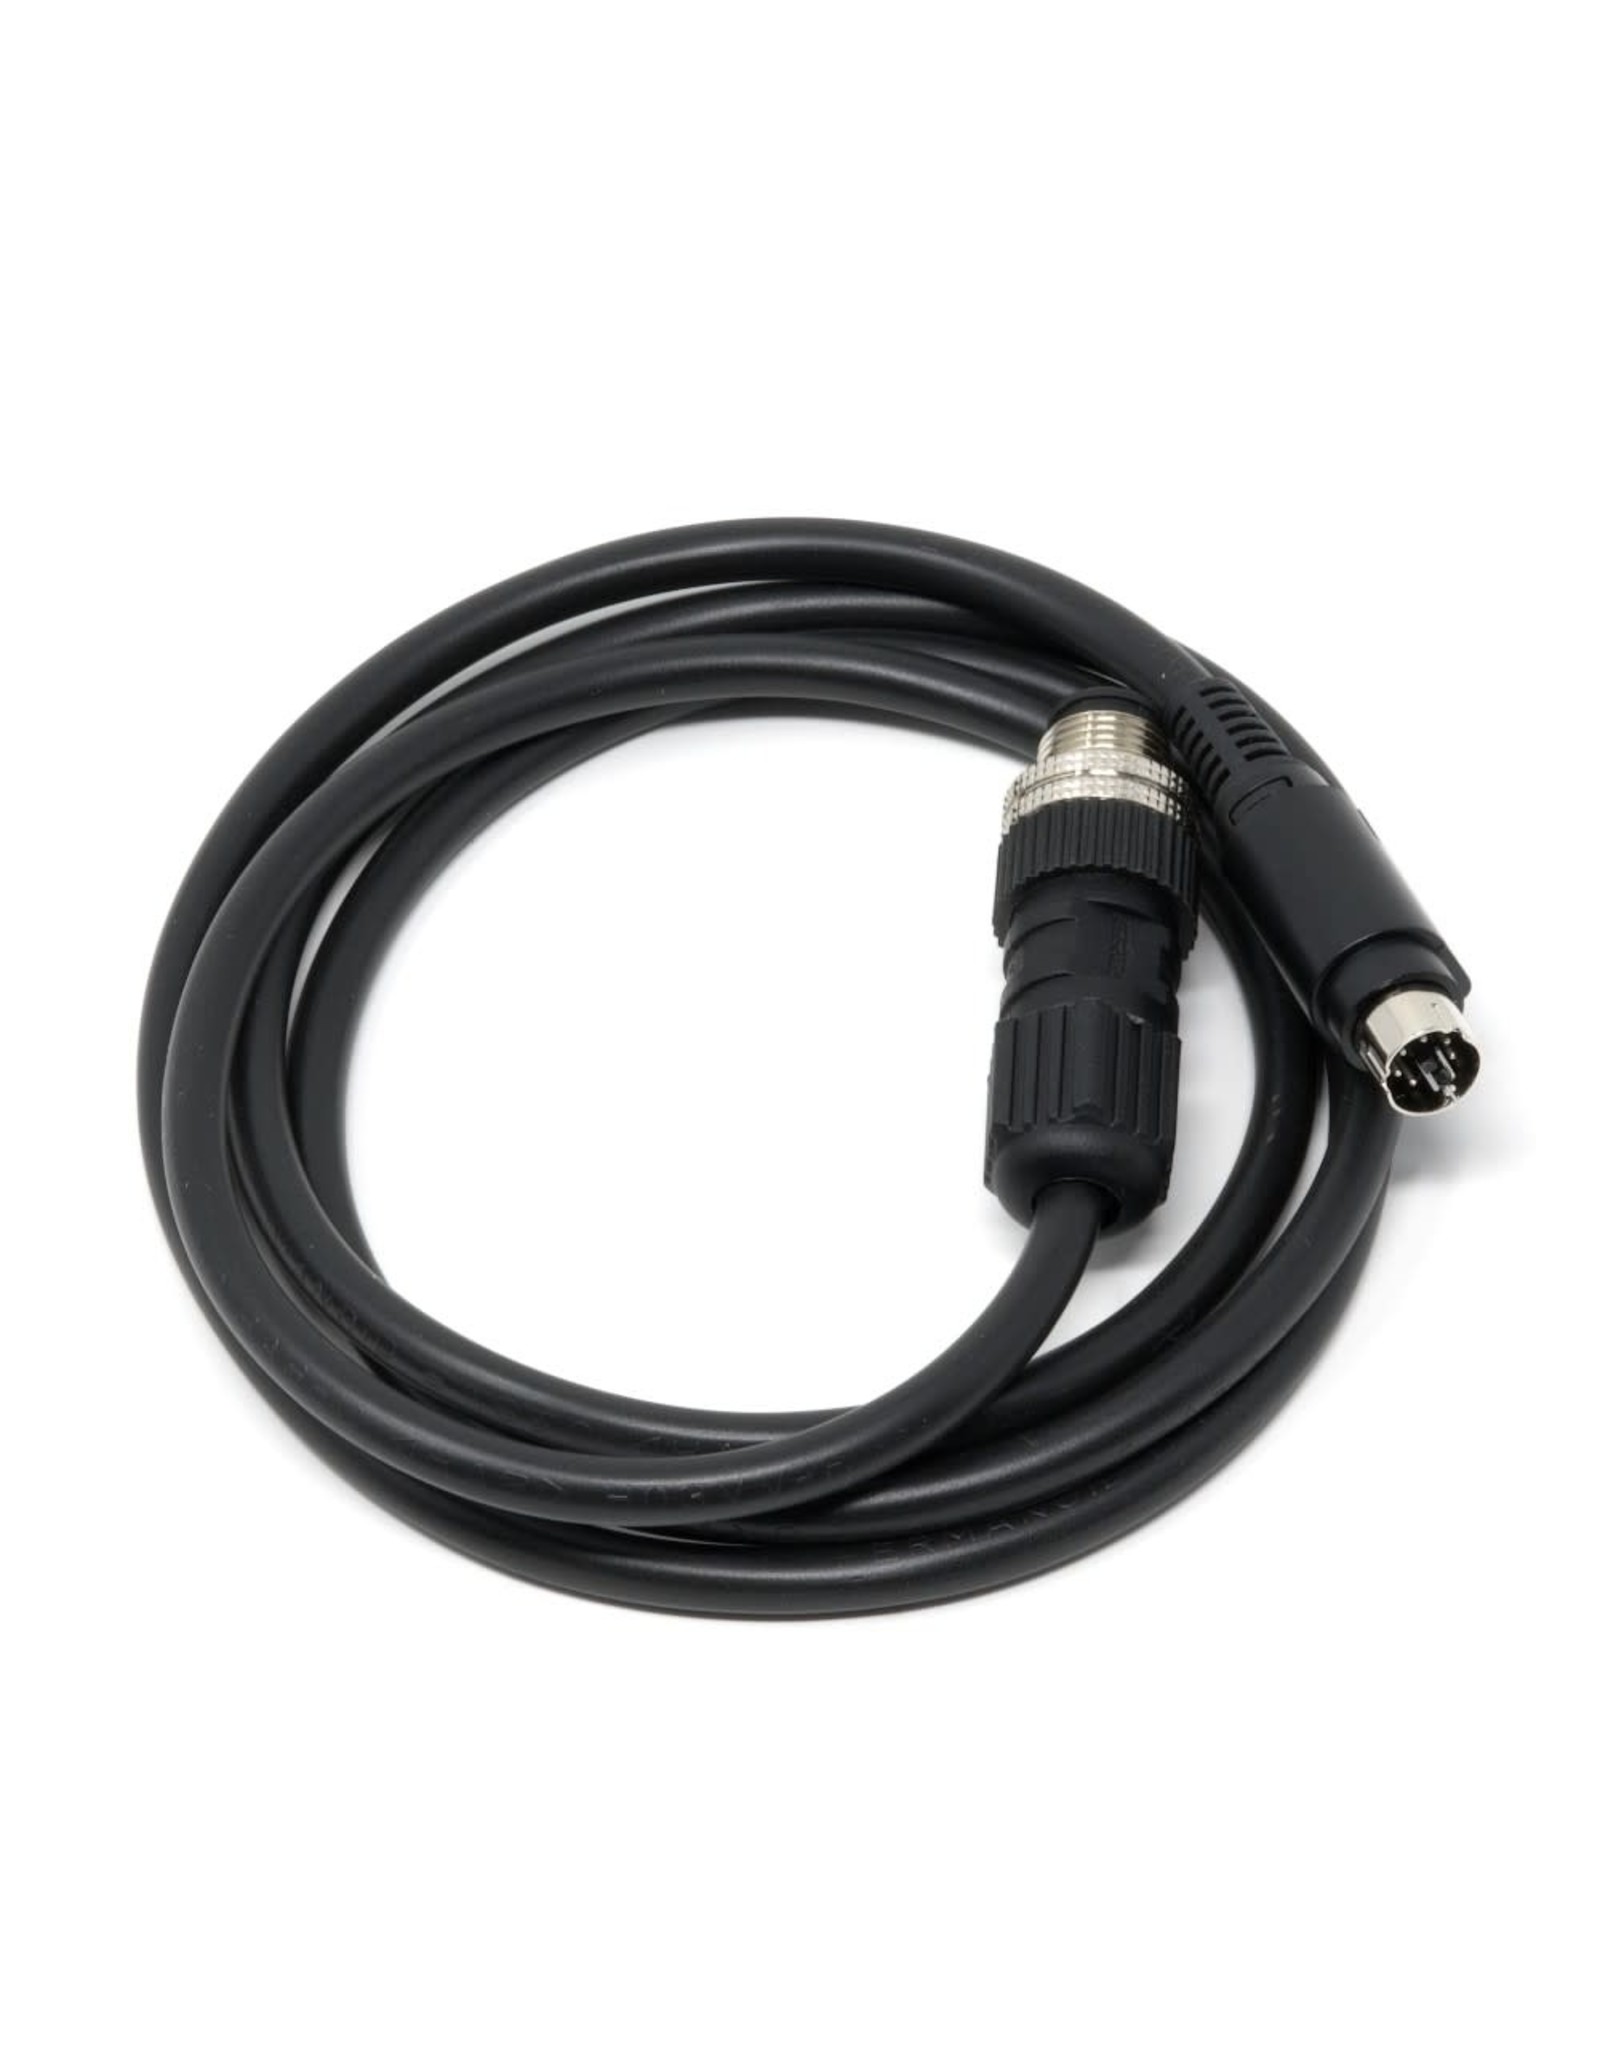 PrimaLuceLab PrimaLuceLab Eagle-Compatible Power Cable for SBIG StarChaser - 115cm 3A